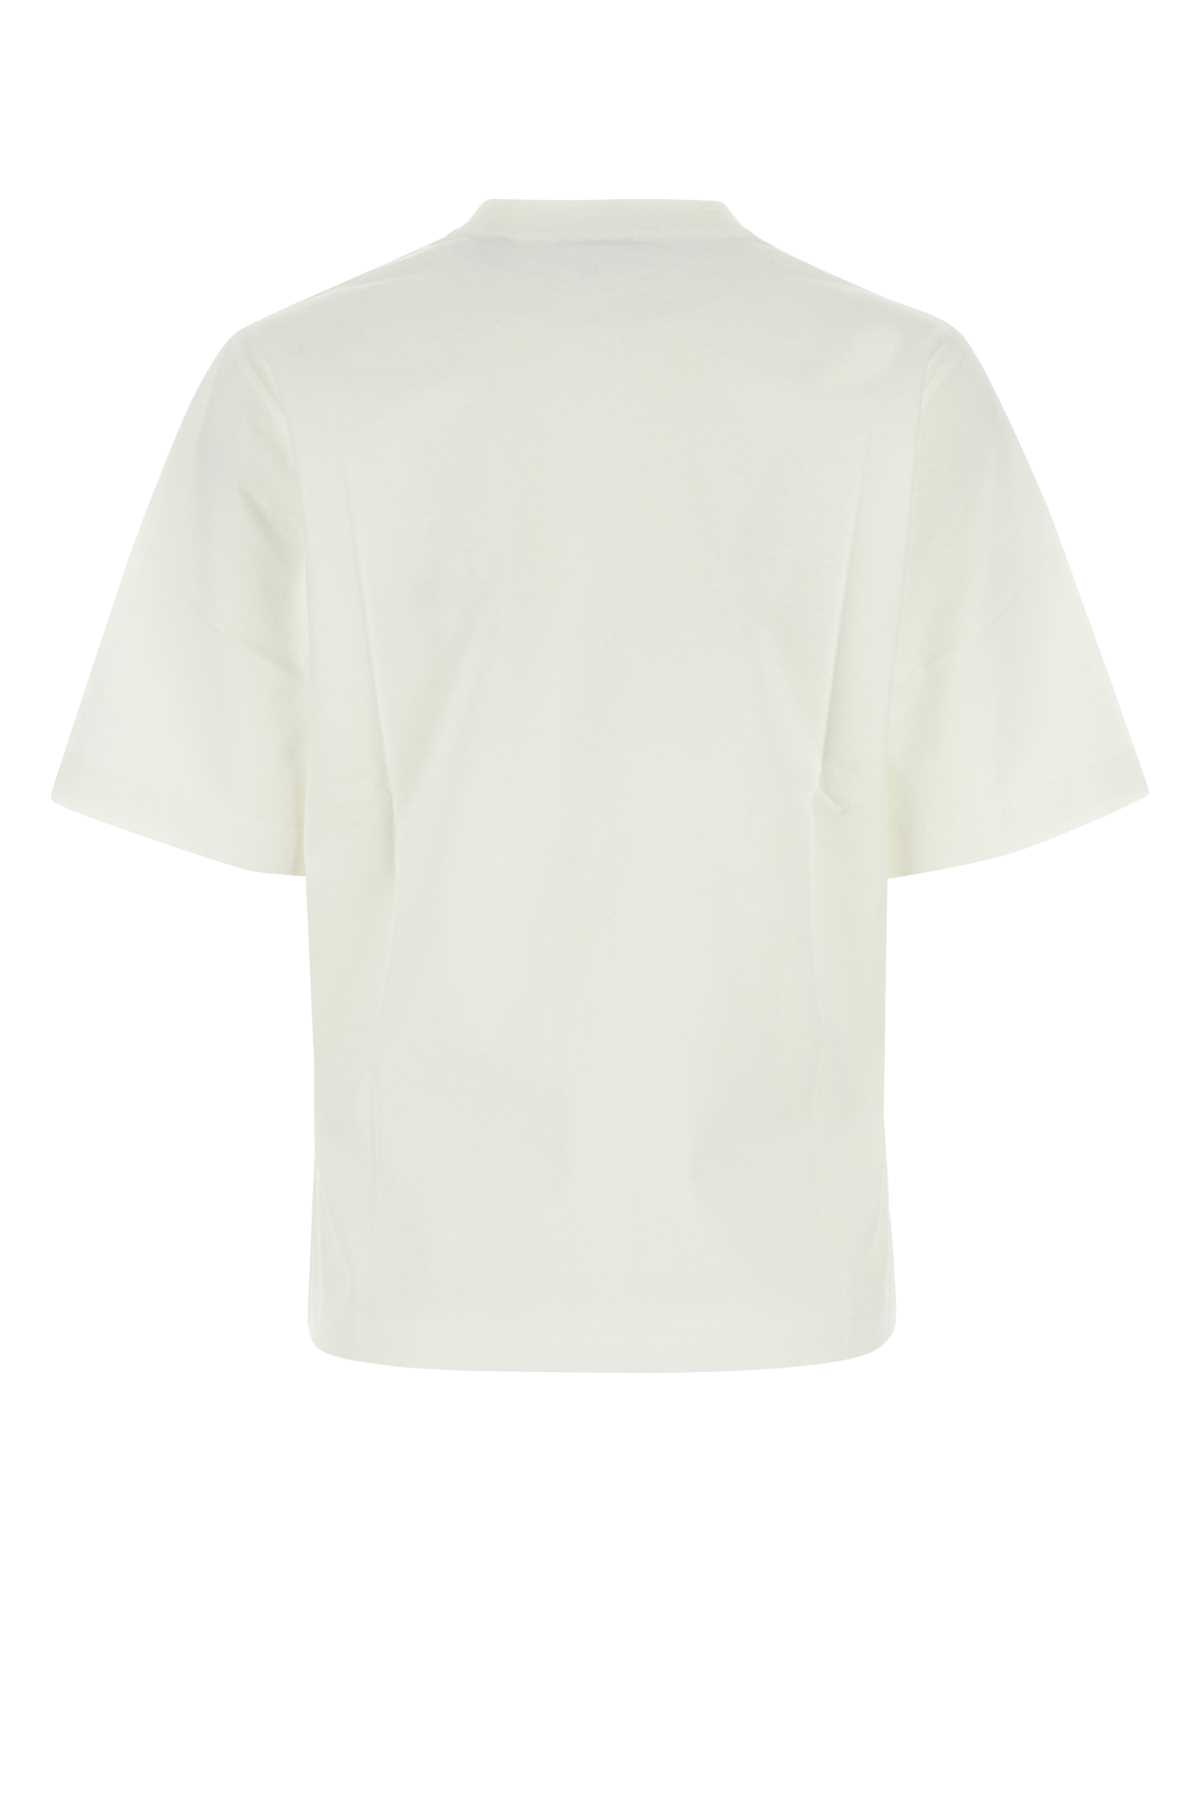 Burberry White Stretch Cotton T-shirt In Rain